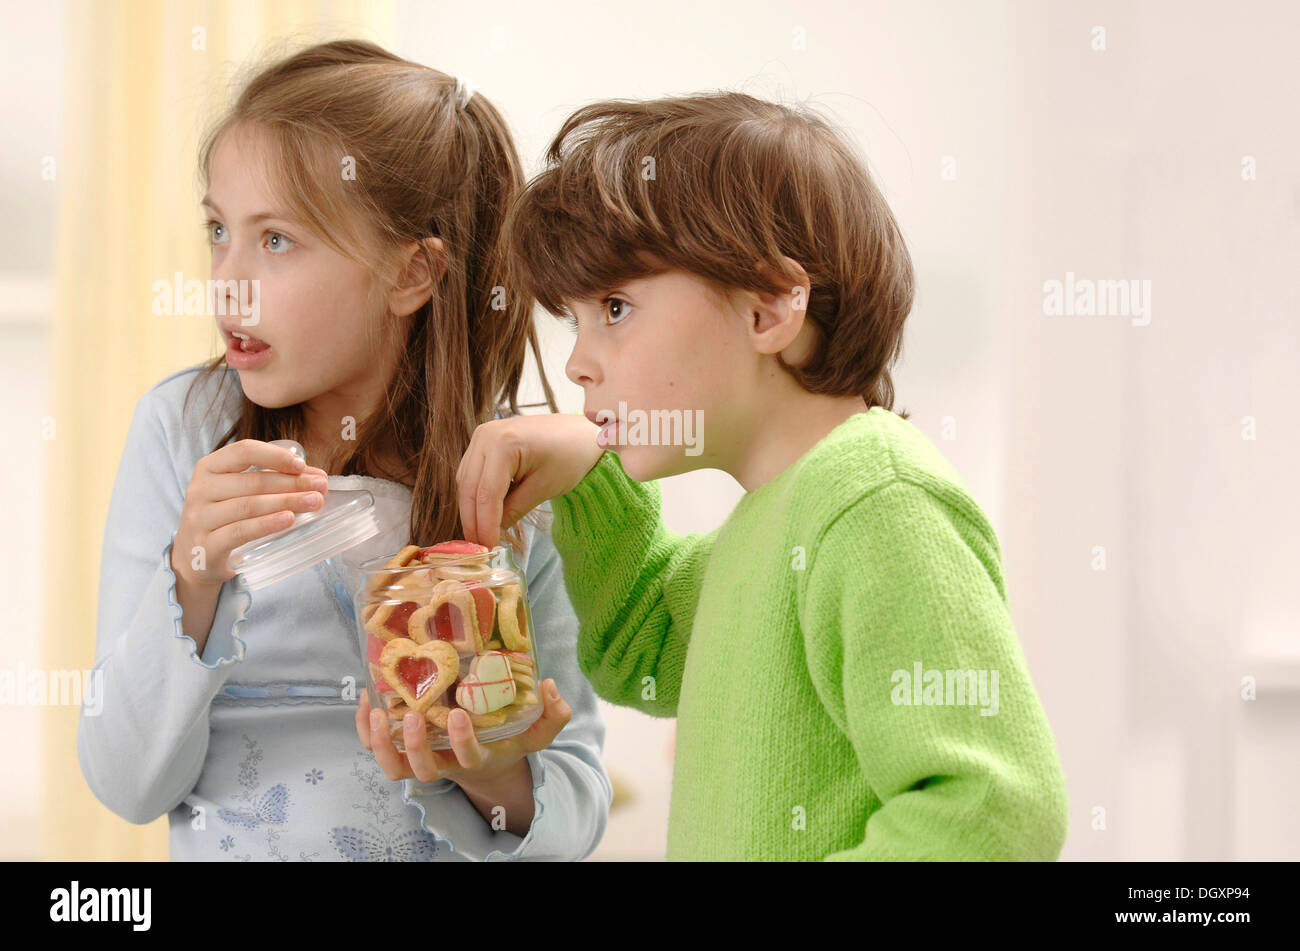 Girl and boy nibbling on Christmas cookies Stock Photo